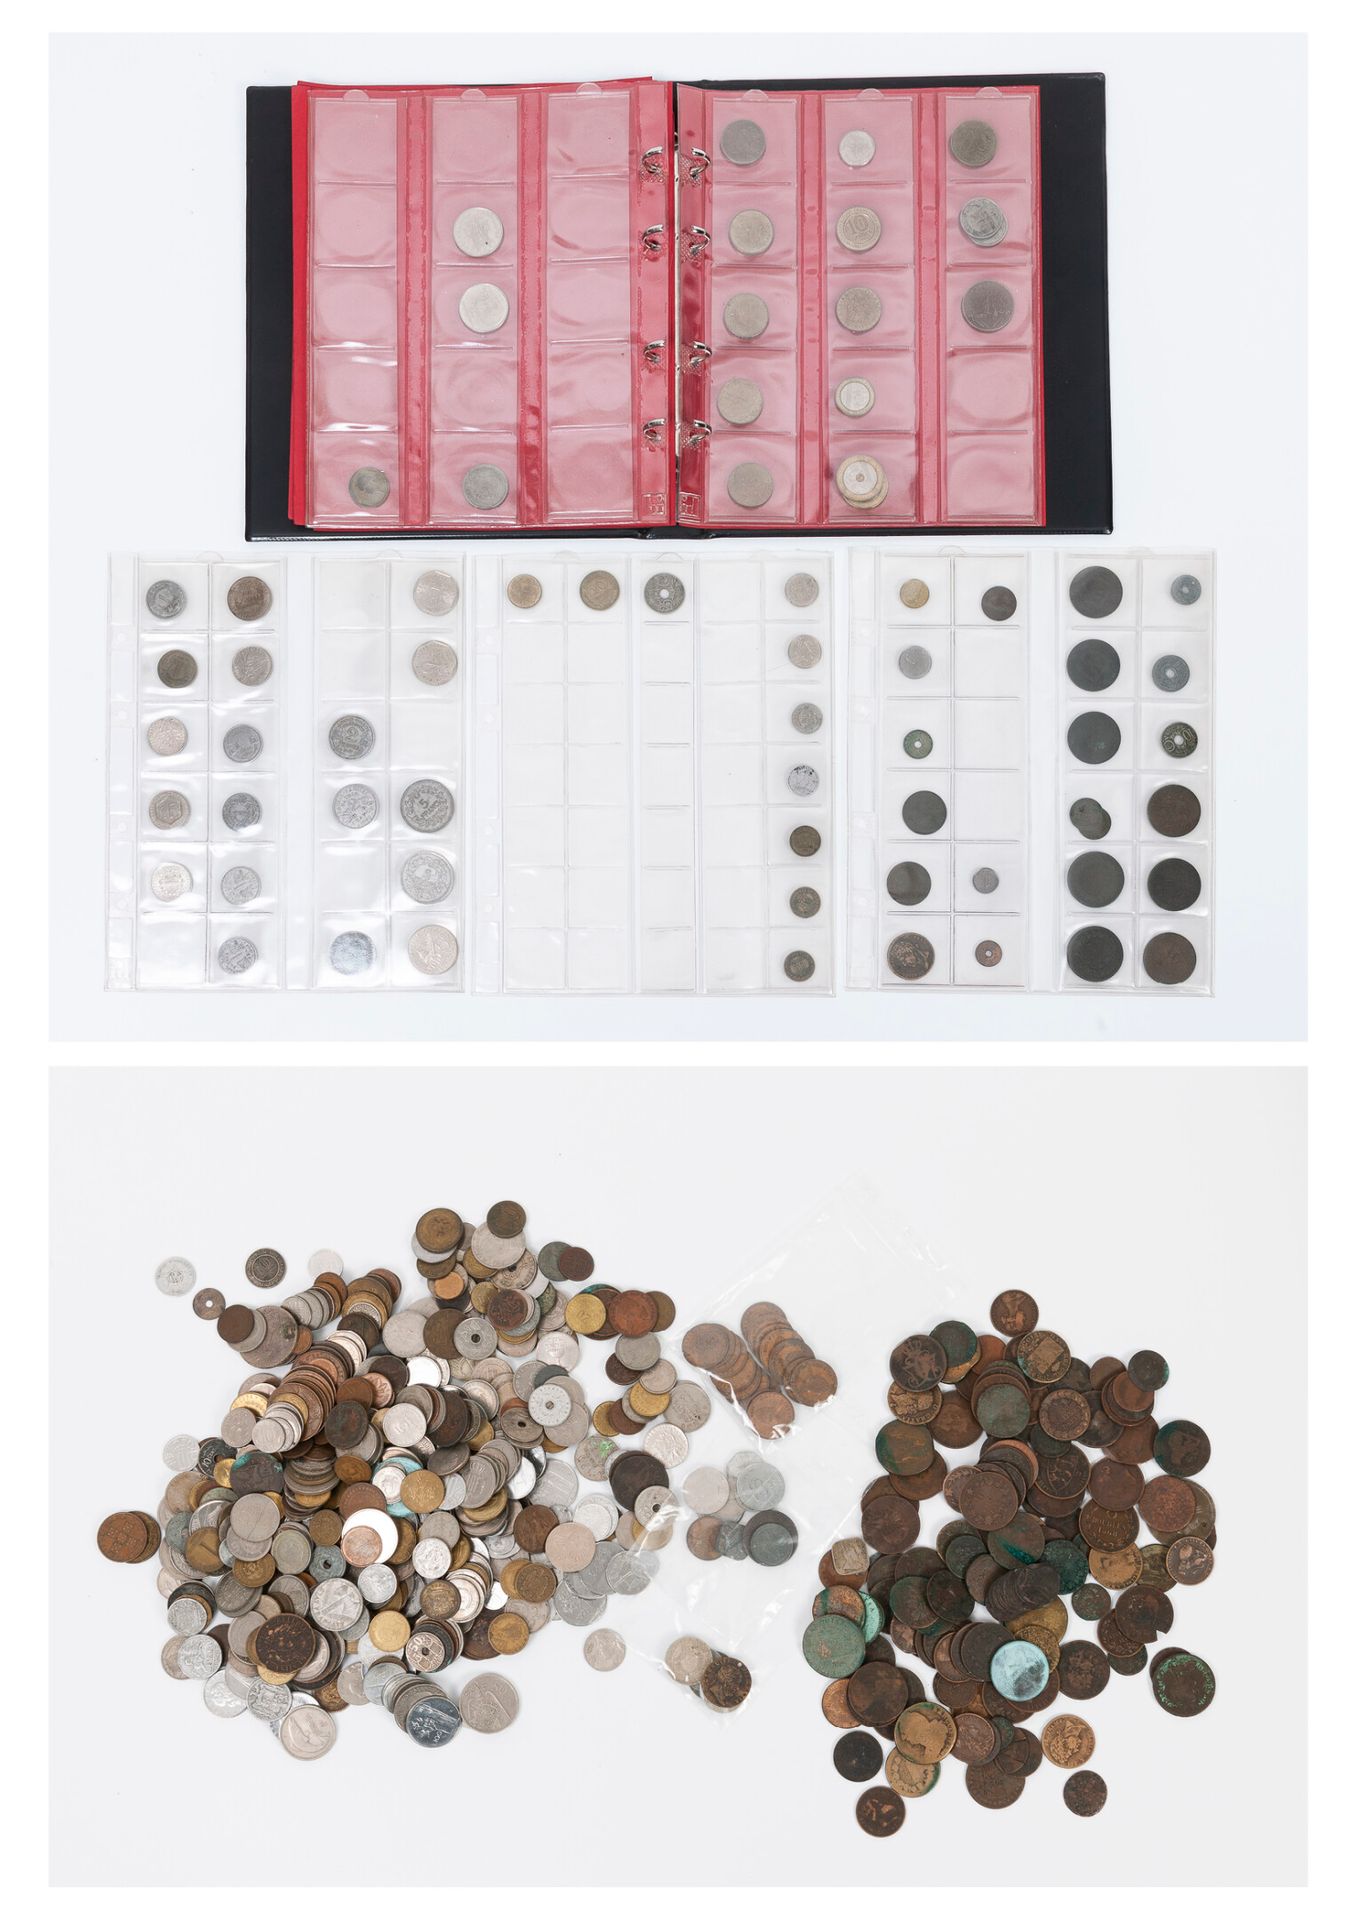 TOUS PAYS, XIXème-XXème siècles 金属或铜质的硬币和一些代币。

一些过塑。

磨损、震荡和事故。